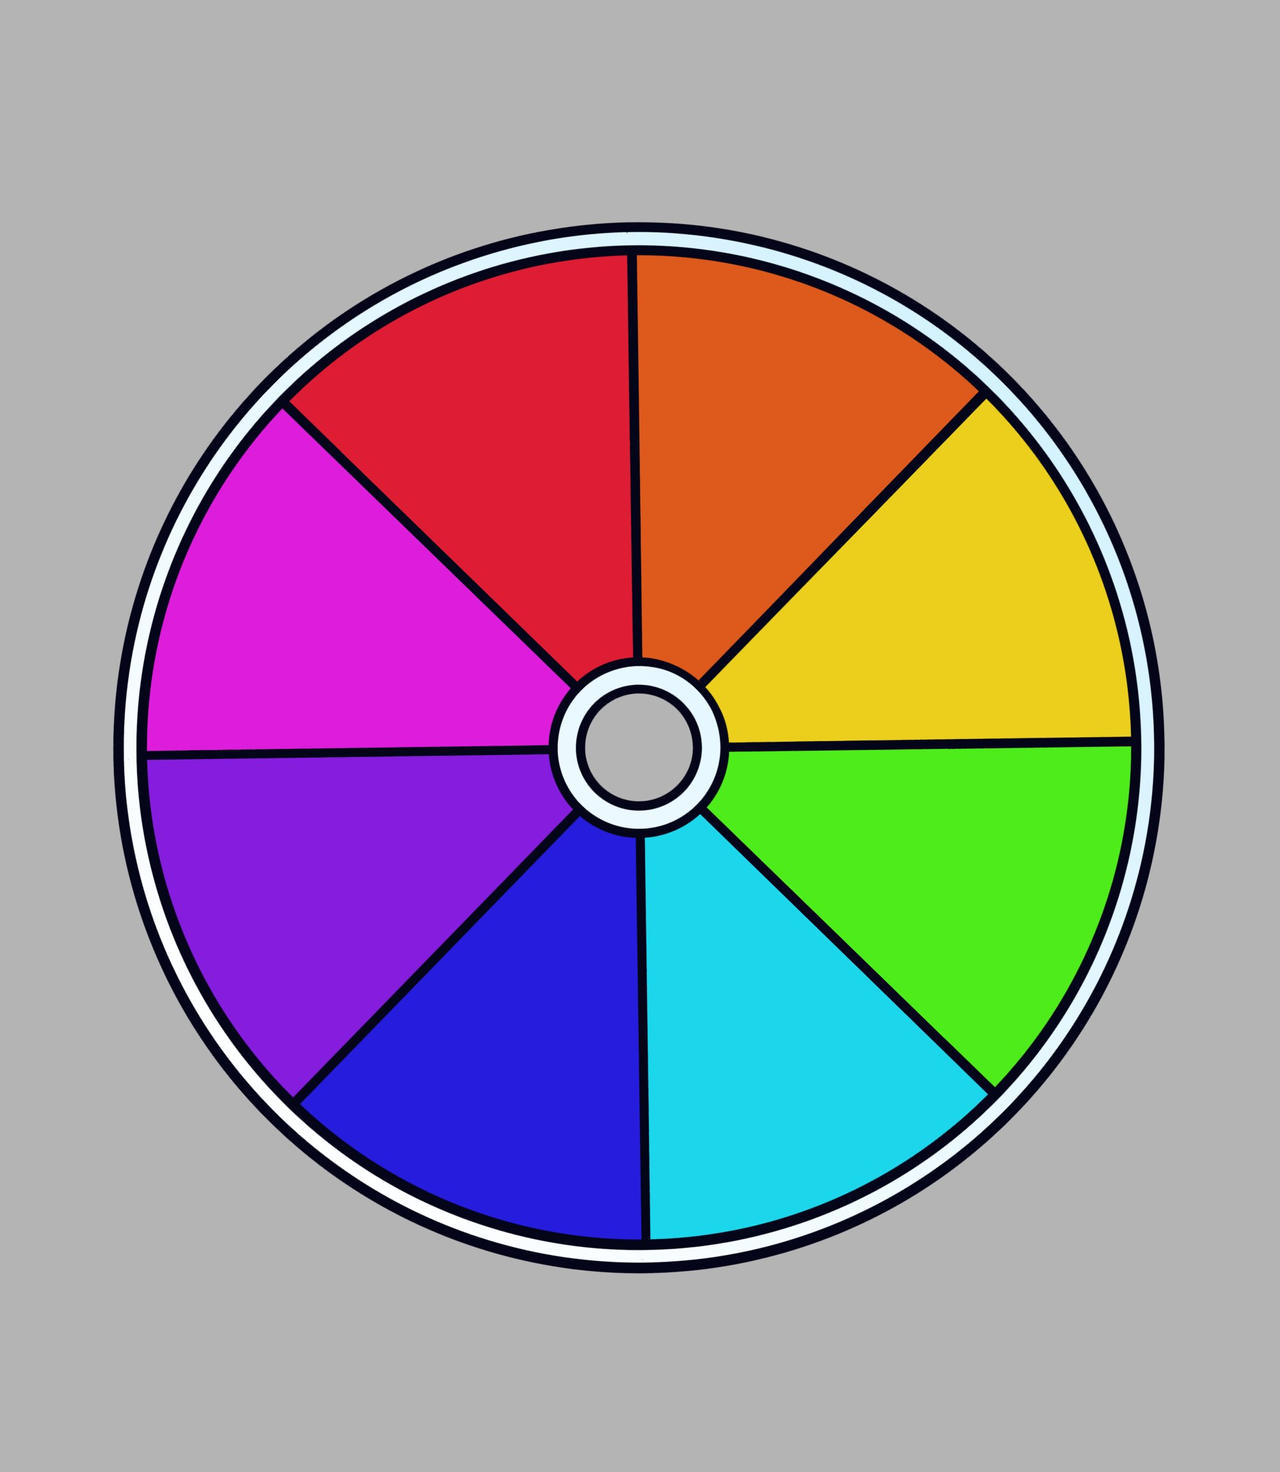 Color Wheel Challenge by Tara012 on DeviantArt